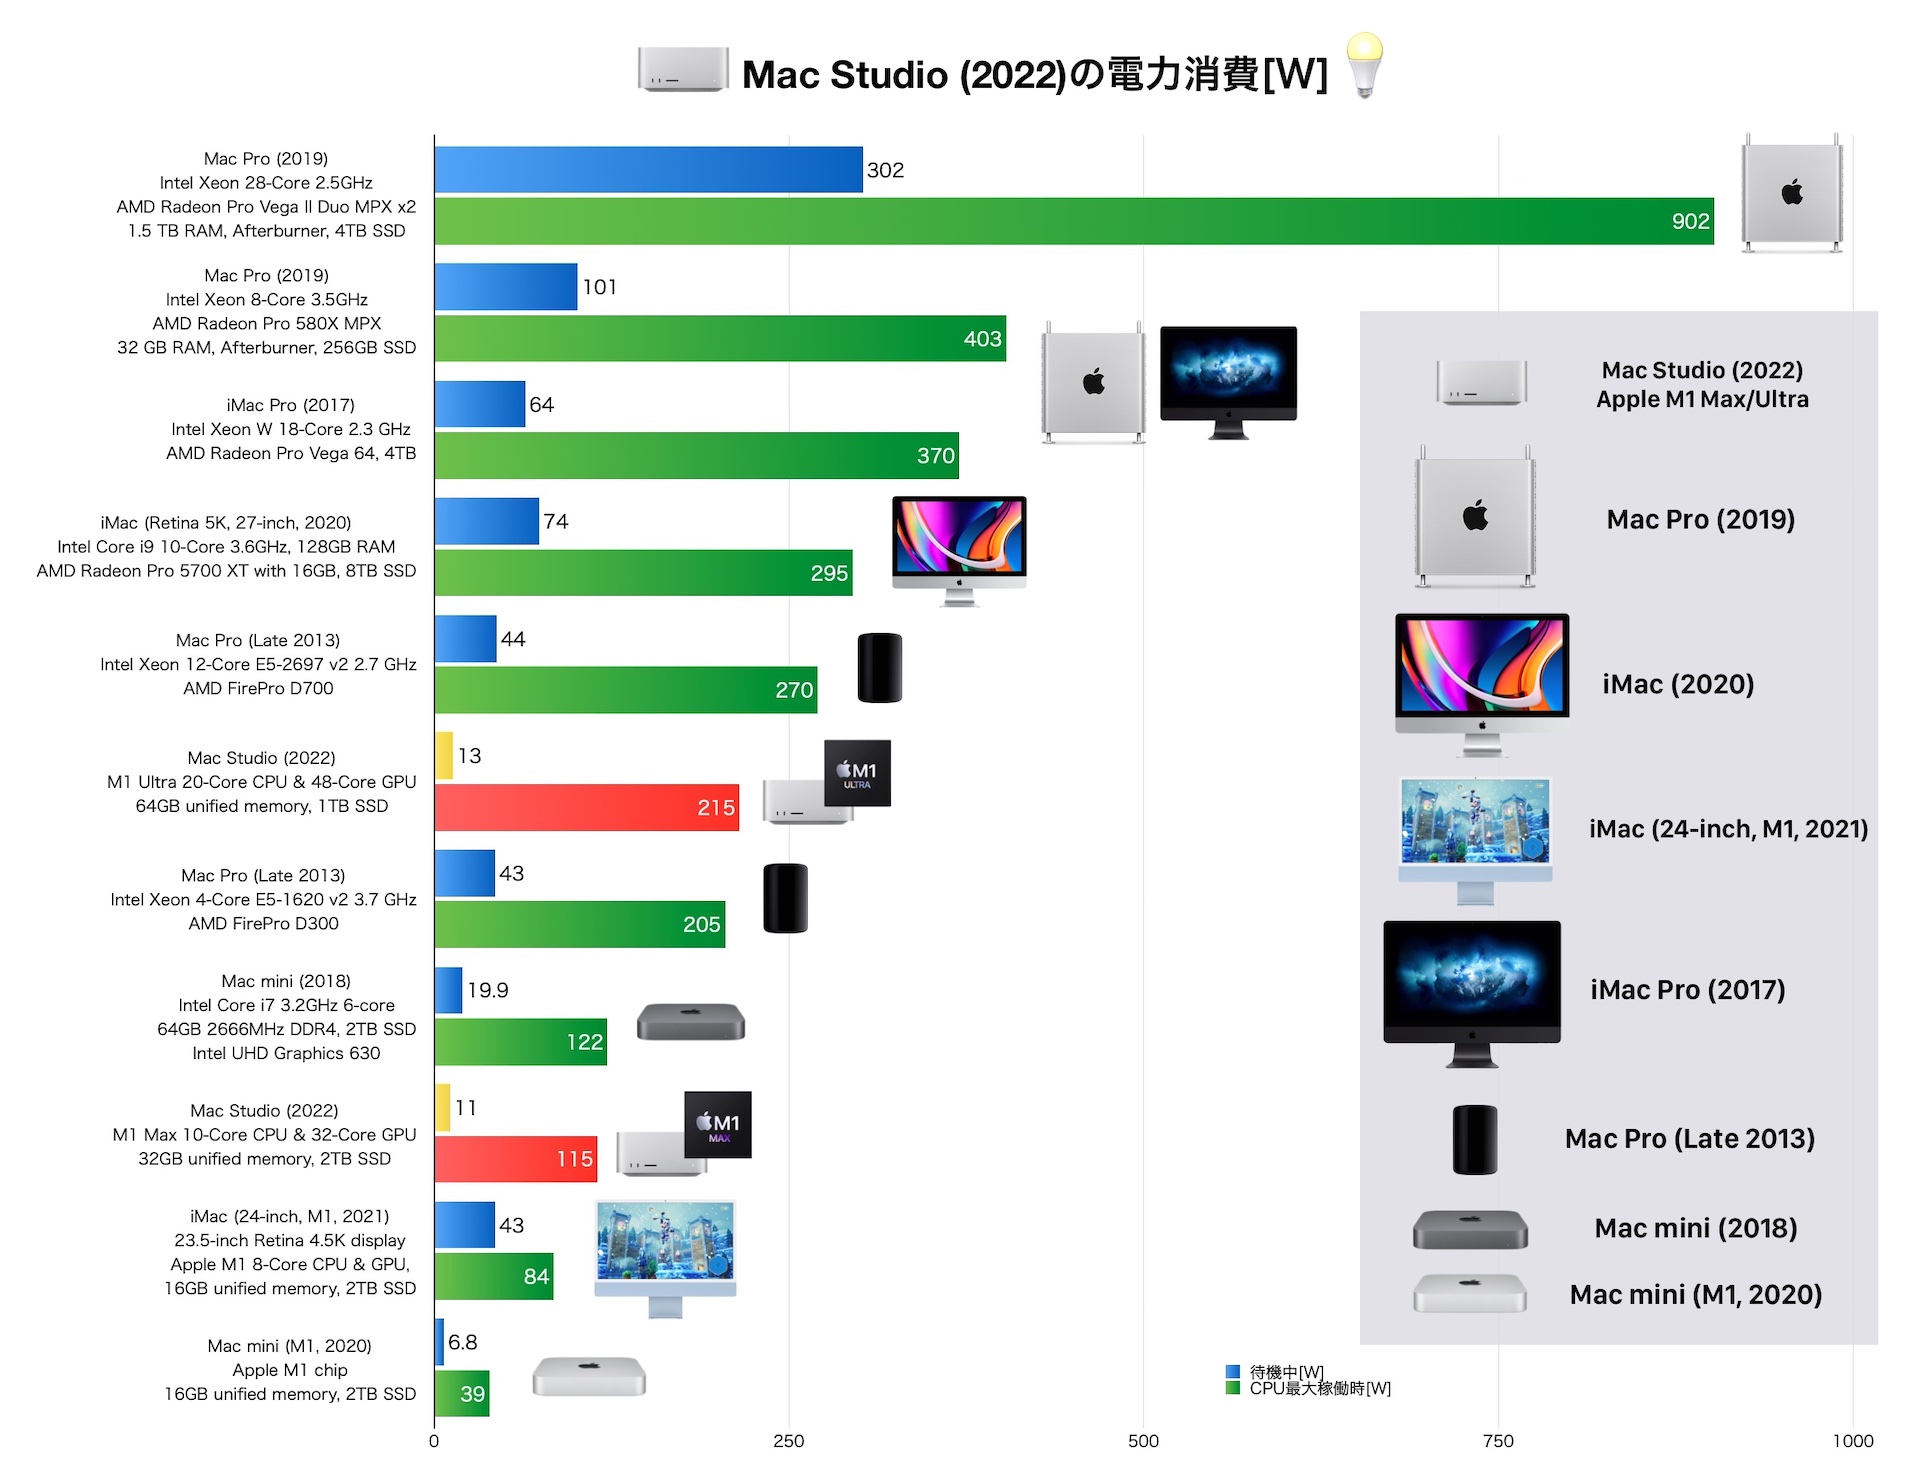 Apple M1 Max/Ultraチップを搭載したMac Studio (2022)の消費電力